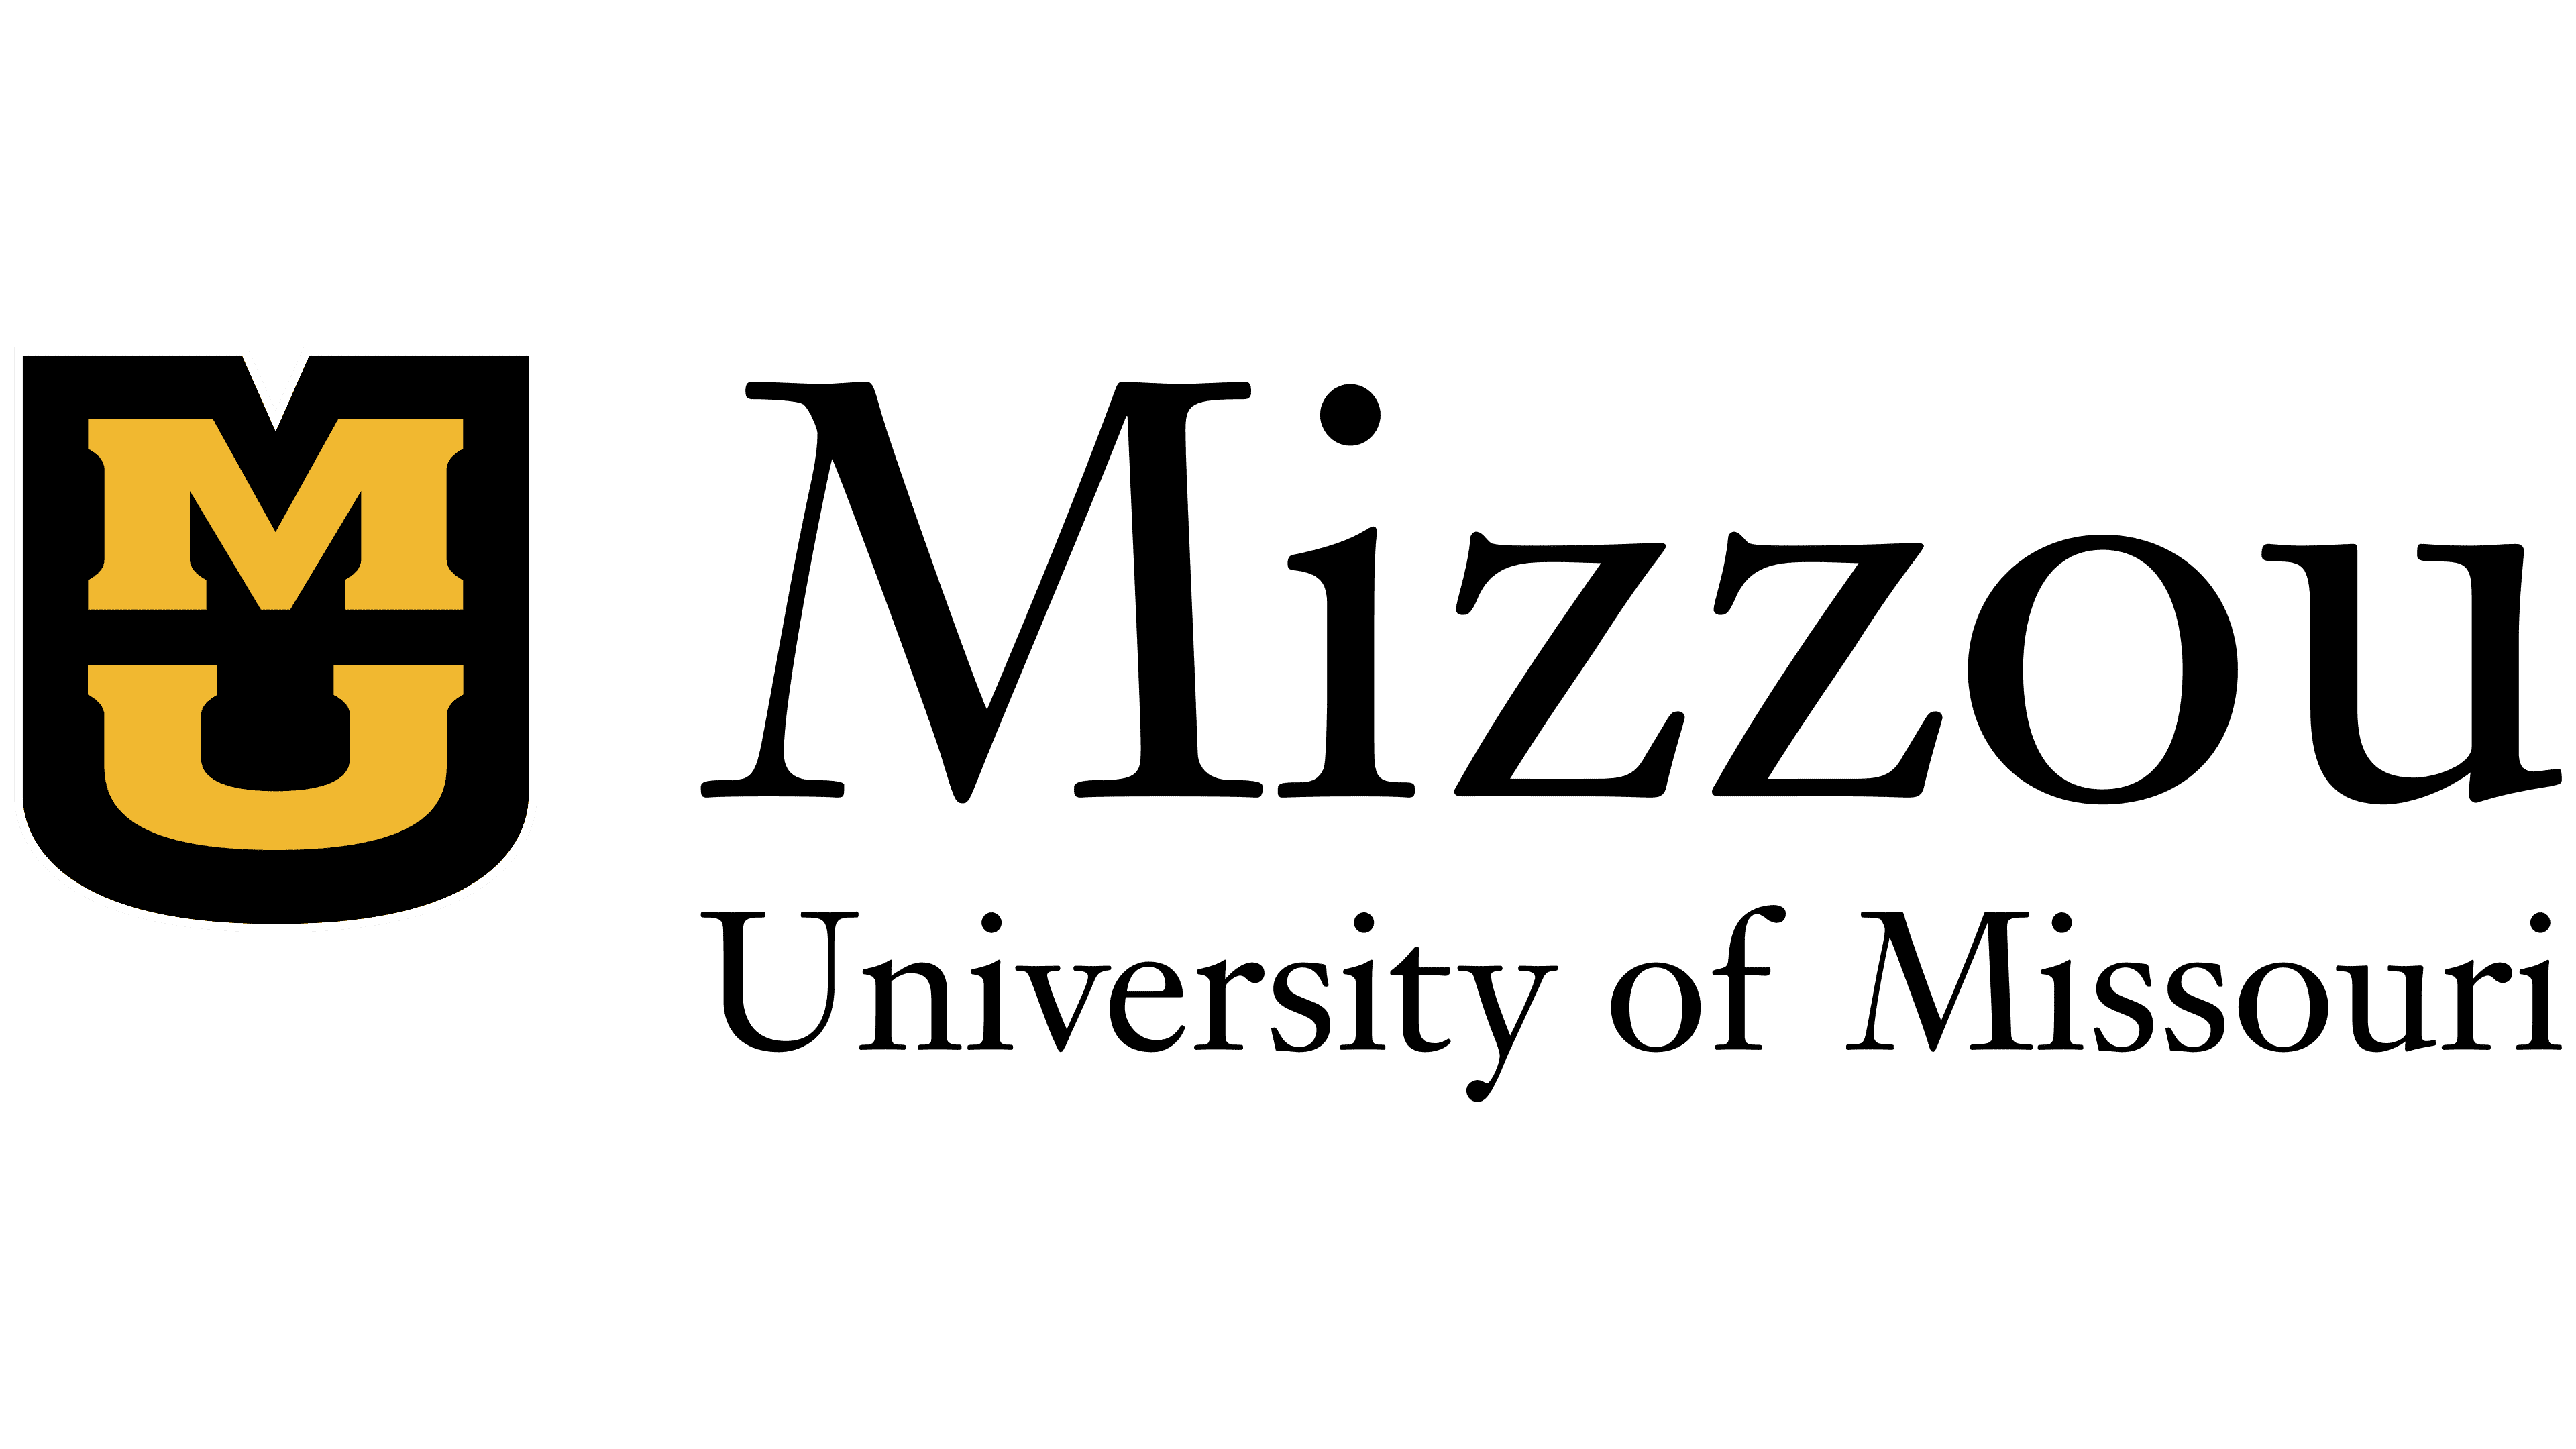 University of Missouri (MU) Teaching Position